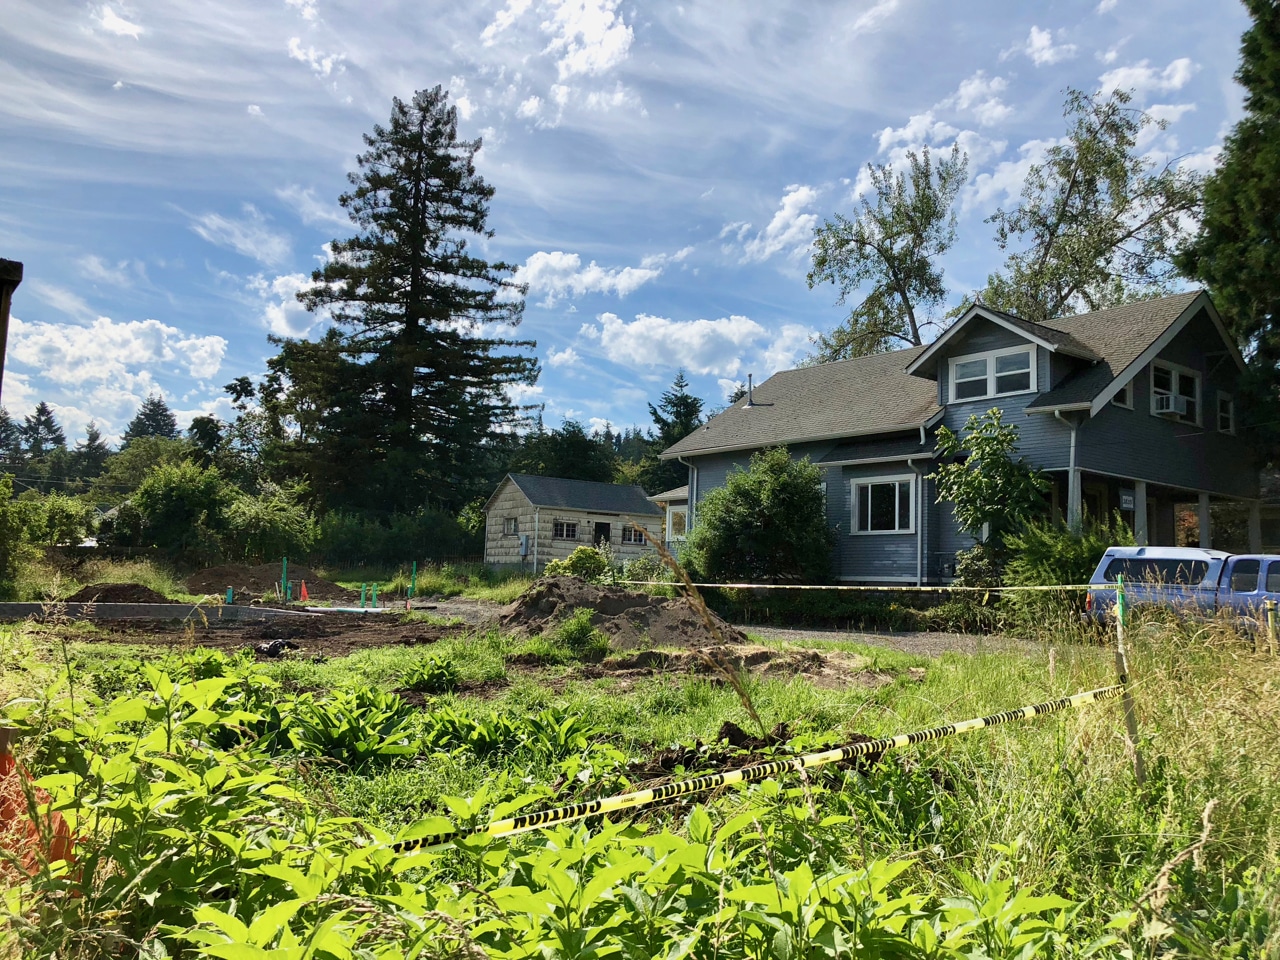 Residential Construction Loans in Eugene, Oregon